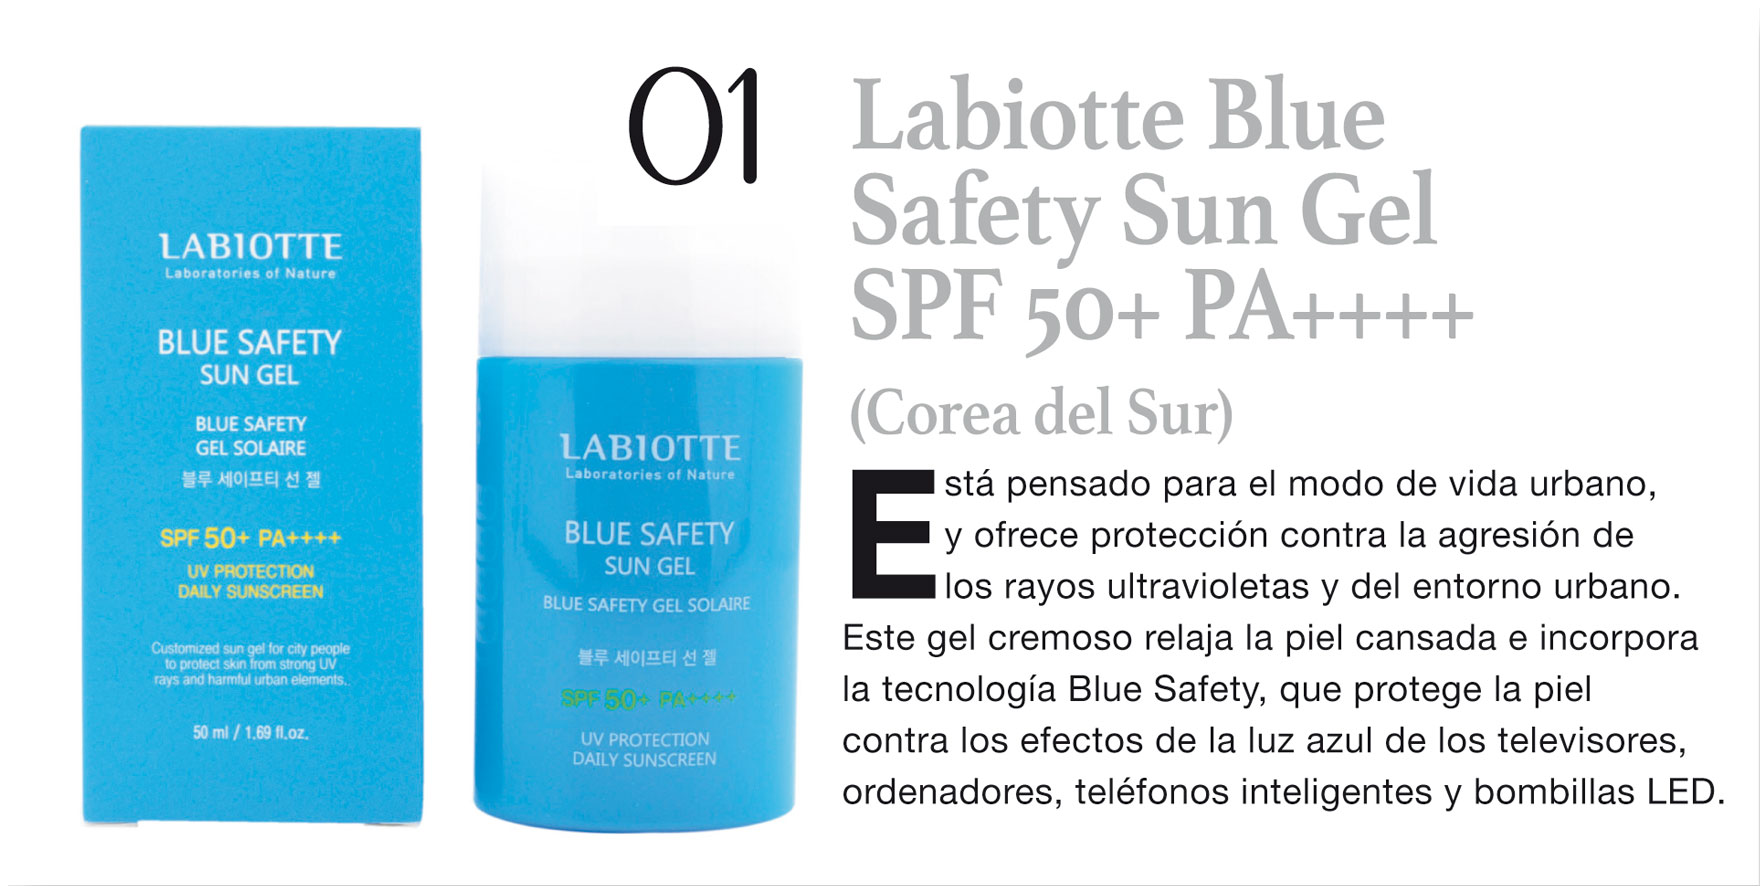 Labiotte Blue Safety Sun Gel SPF 50+ PA++++